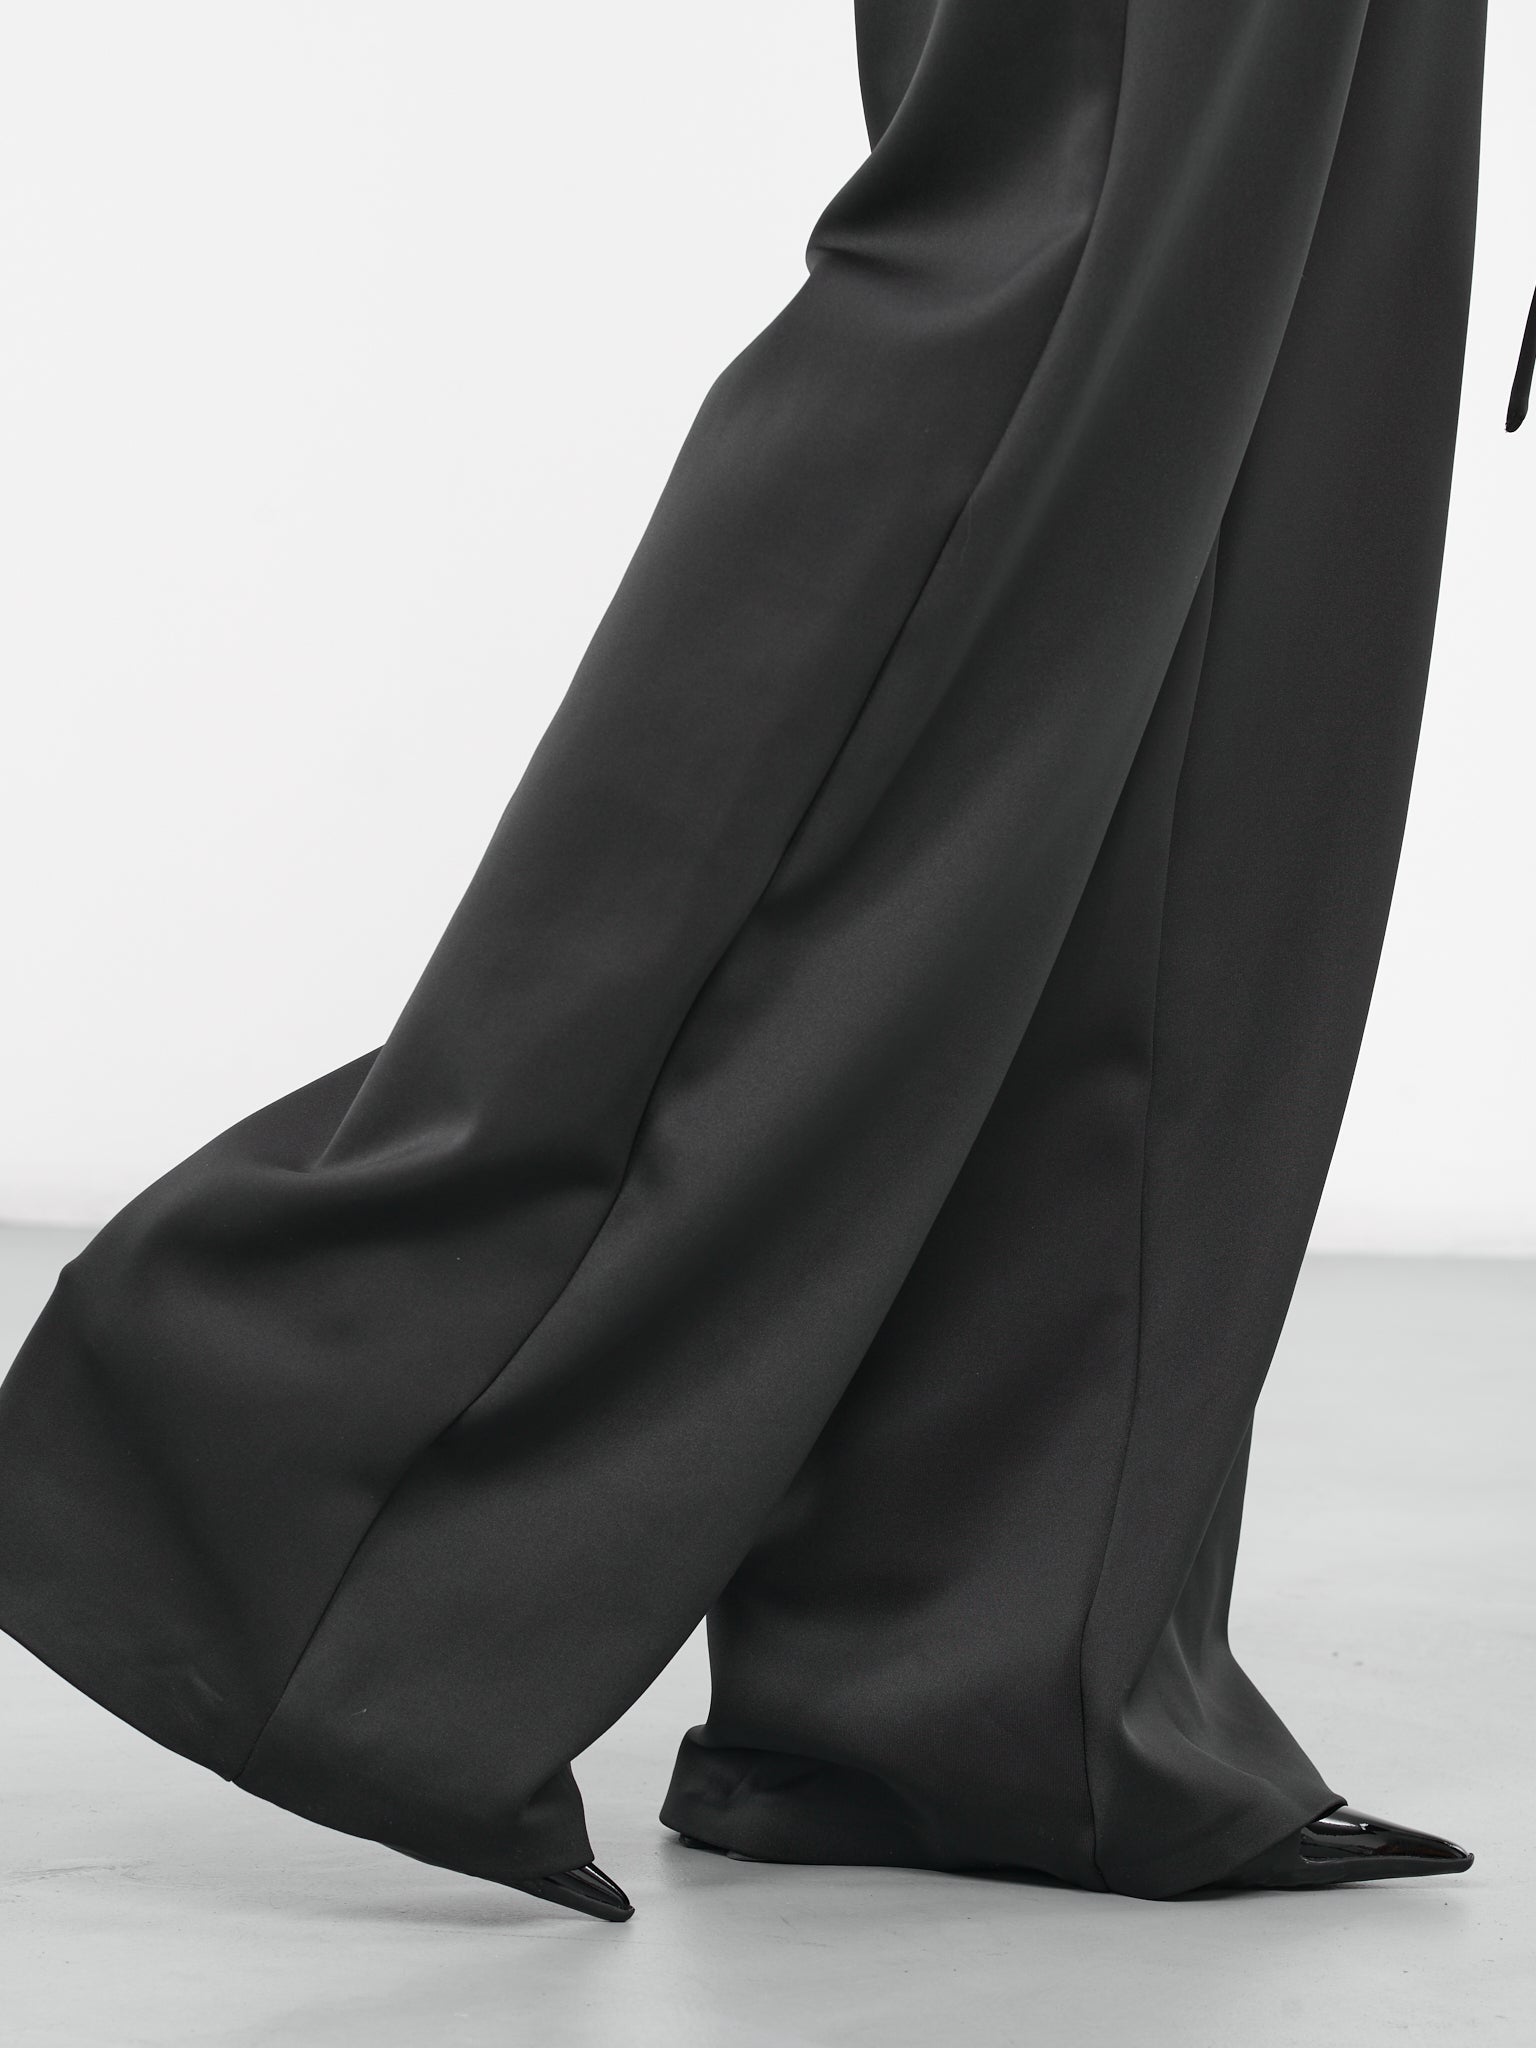 Double Waistband Suit Trousers (02410-BLACK)